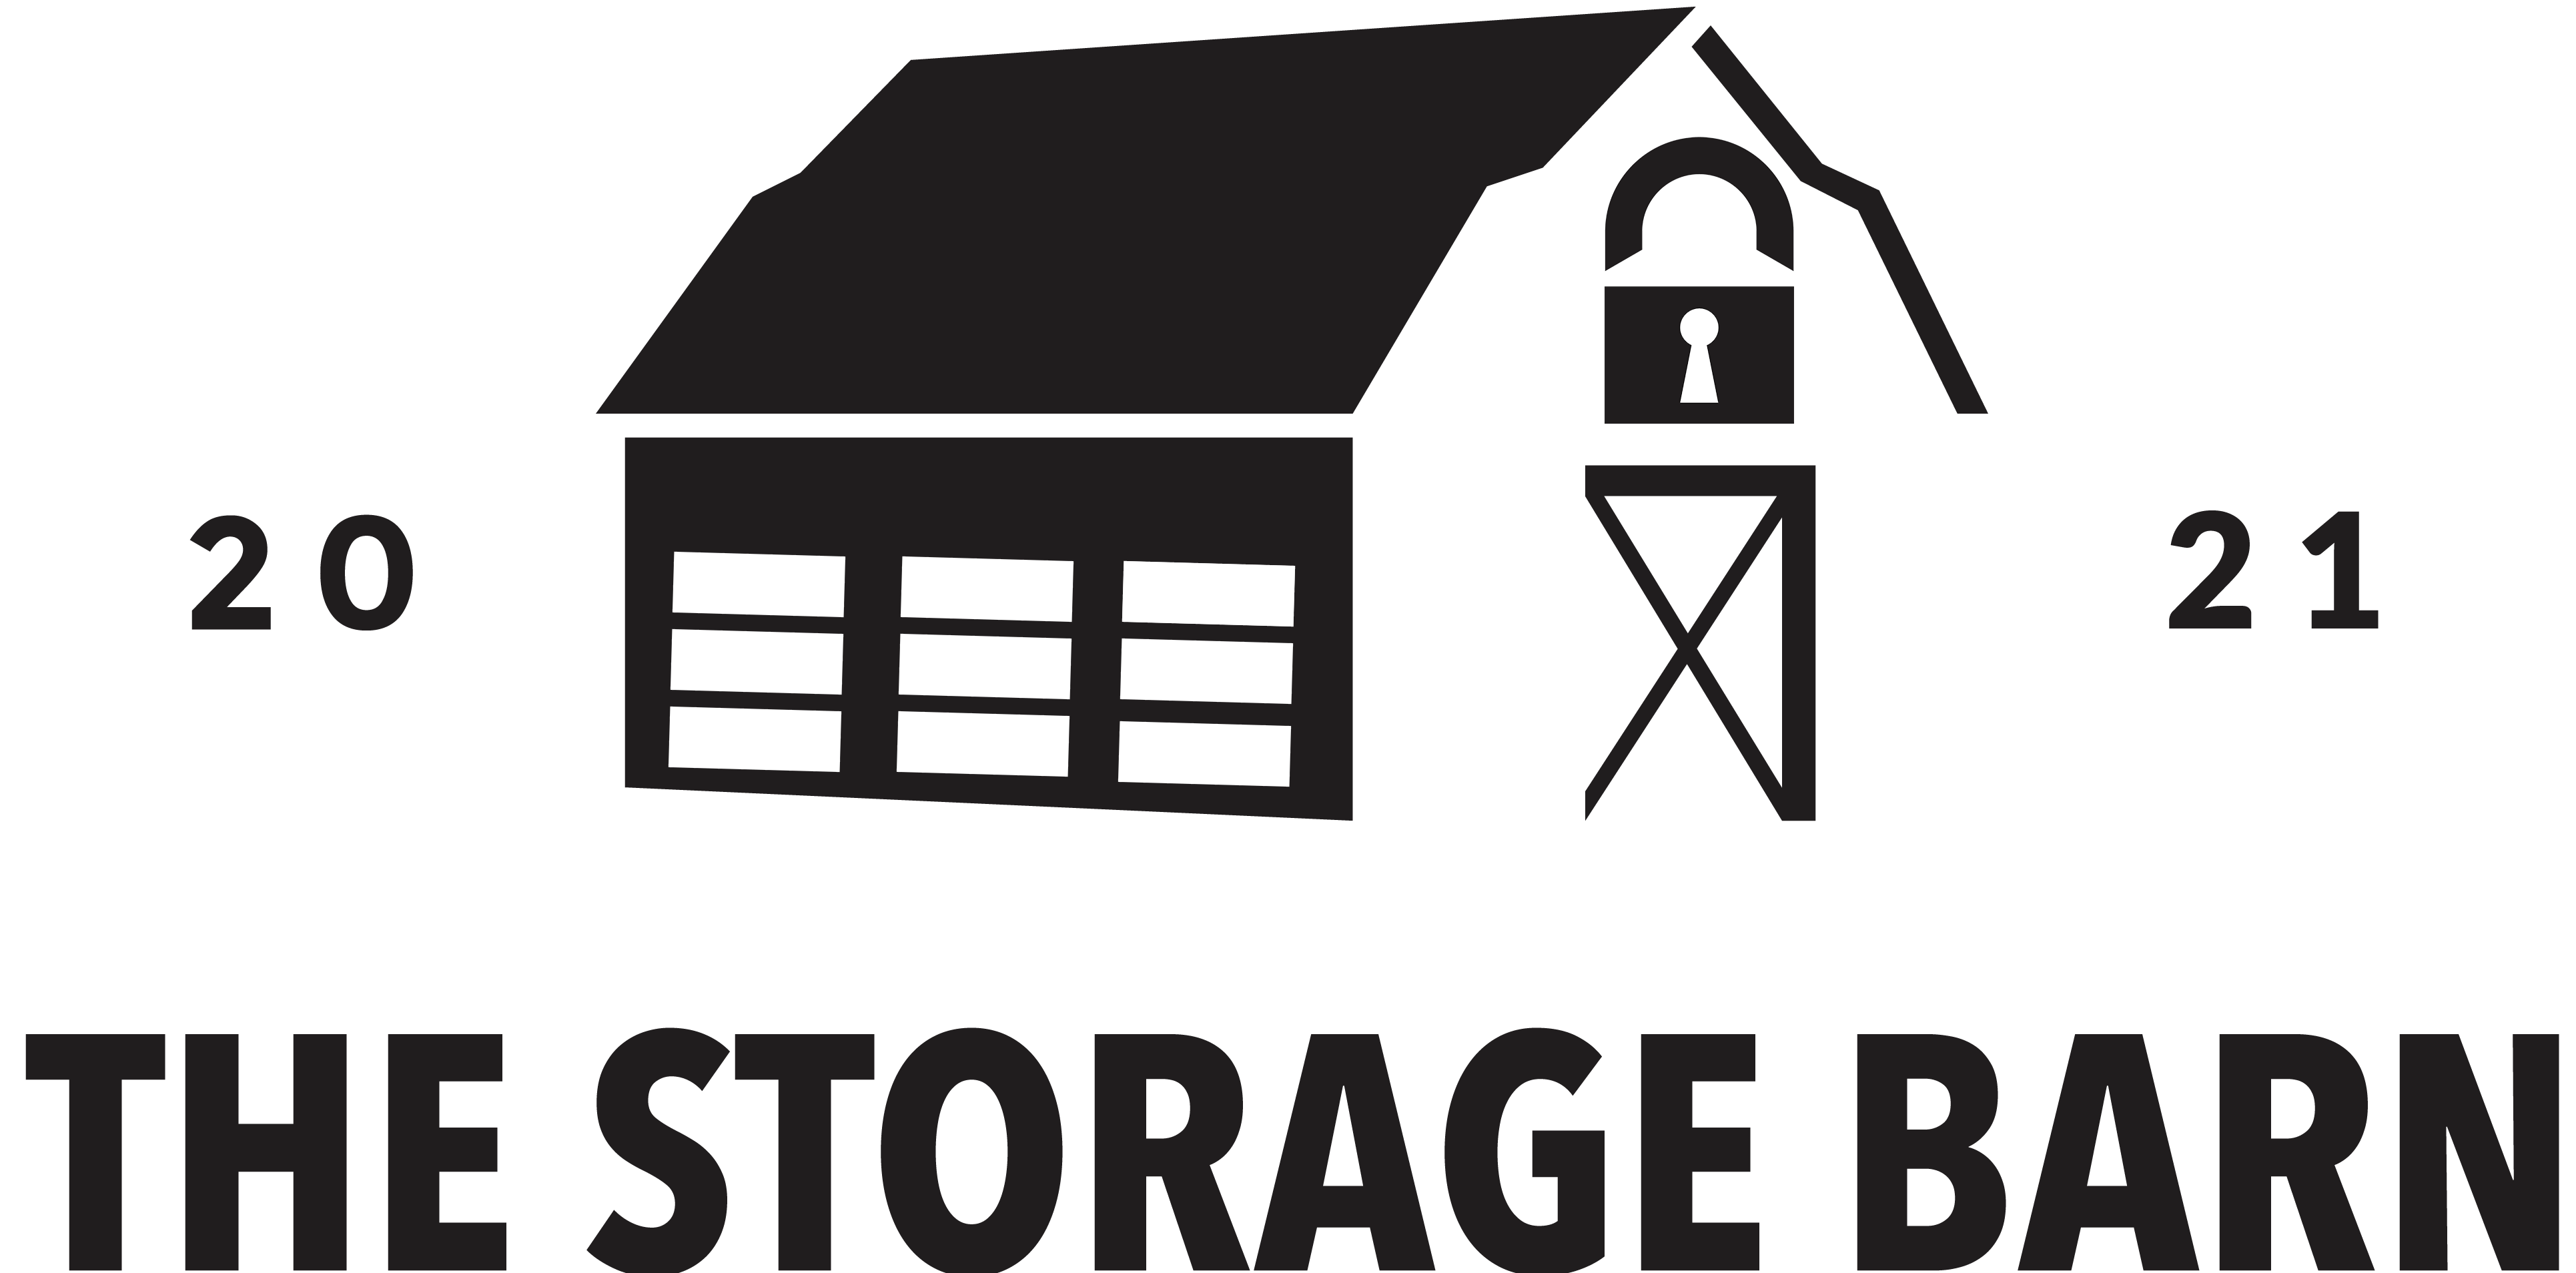 The Storage Barn logo